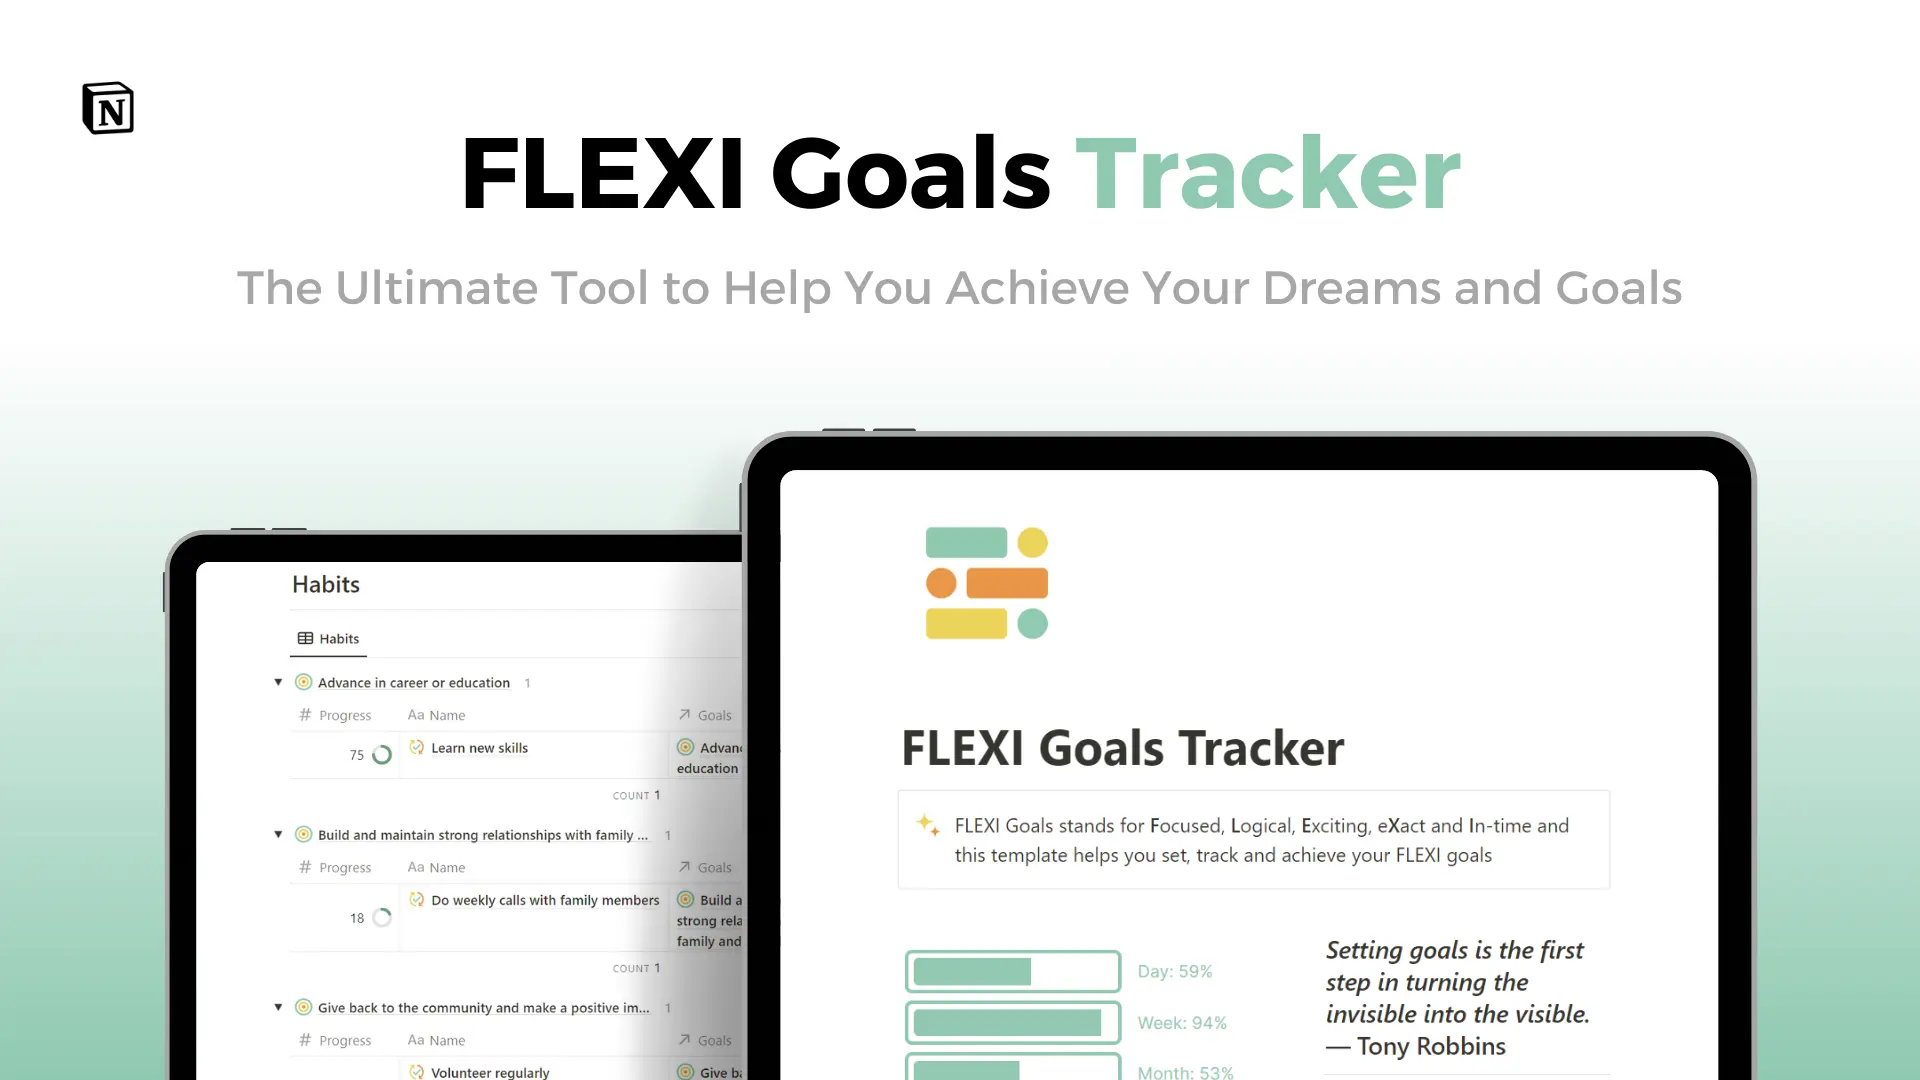 FLEXI Goals Tracker image